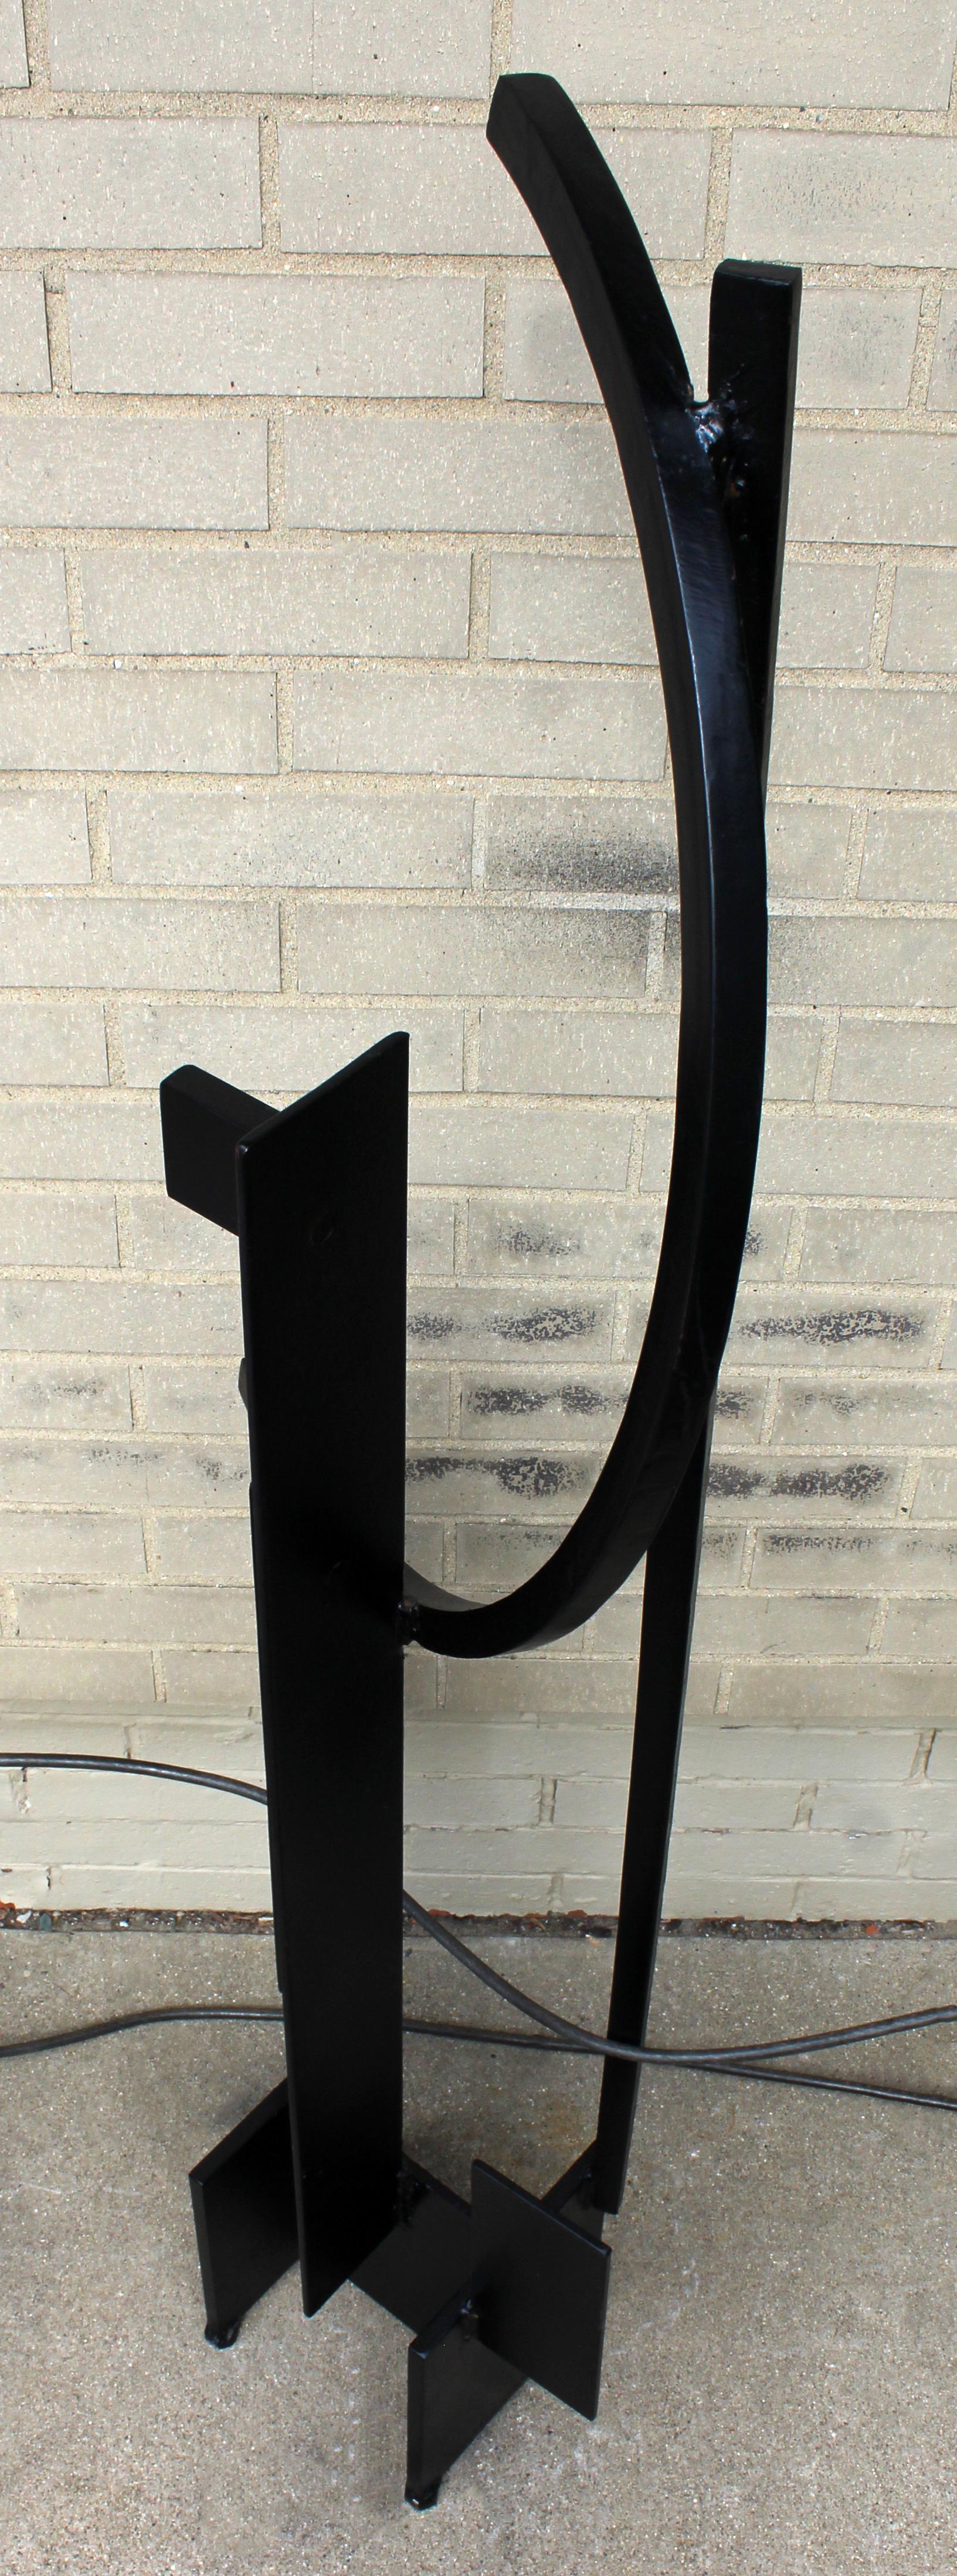 Contemporary Forged Iron Black Abstract Art Floor Sculpture by Robert Hansen 1